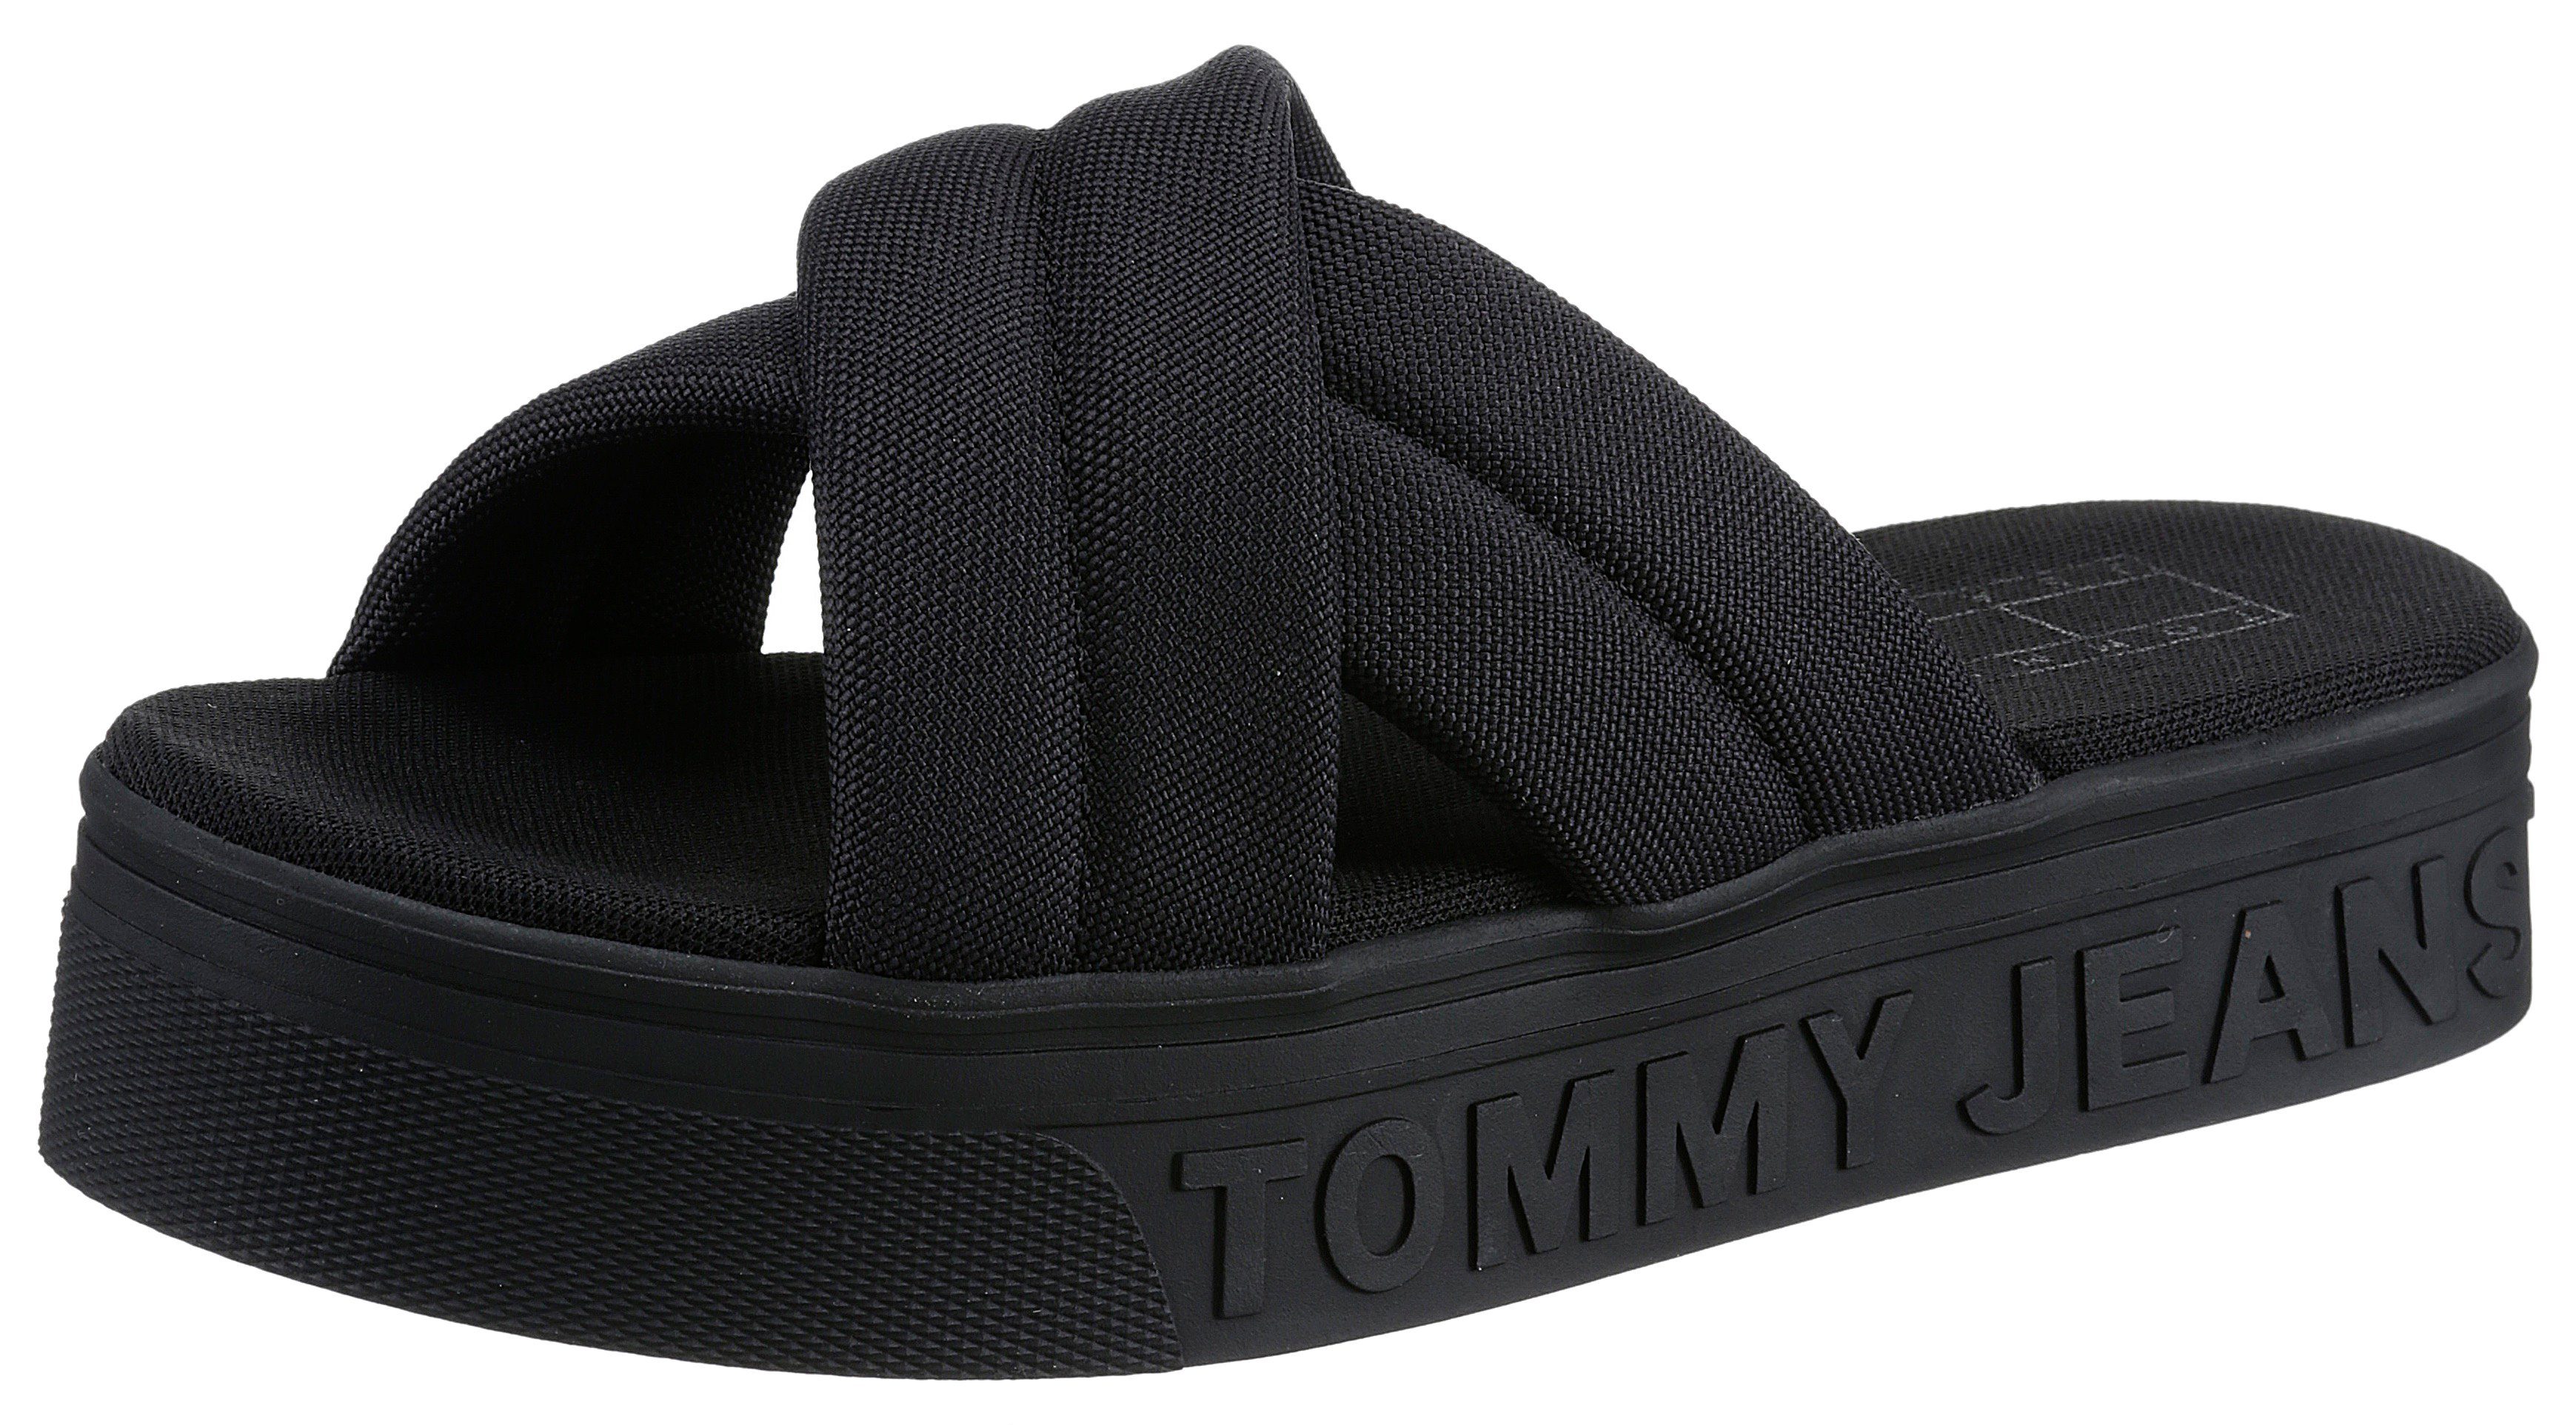 Tommy Jeans TOMMY JEANS FLTFRM SANDAL schwarz wattierter Kreuzbandage mit Pantolette